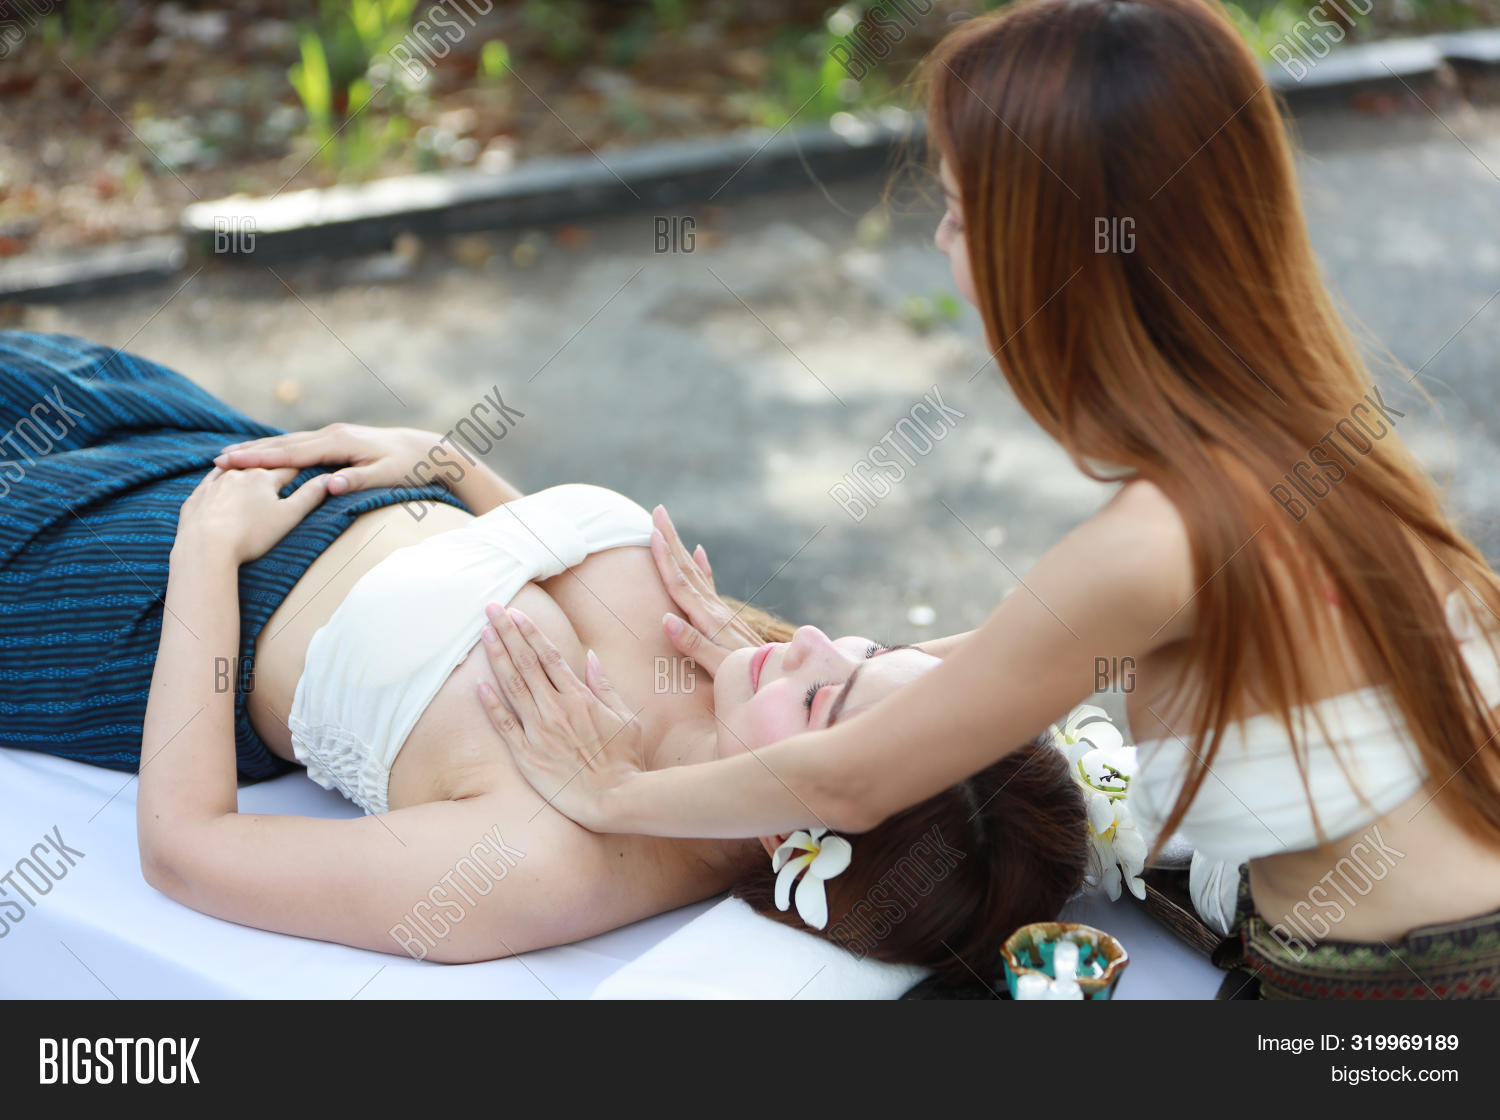 david cashman recommends Asian Brest Massage